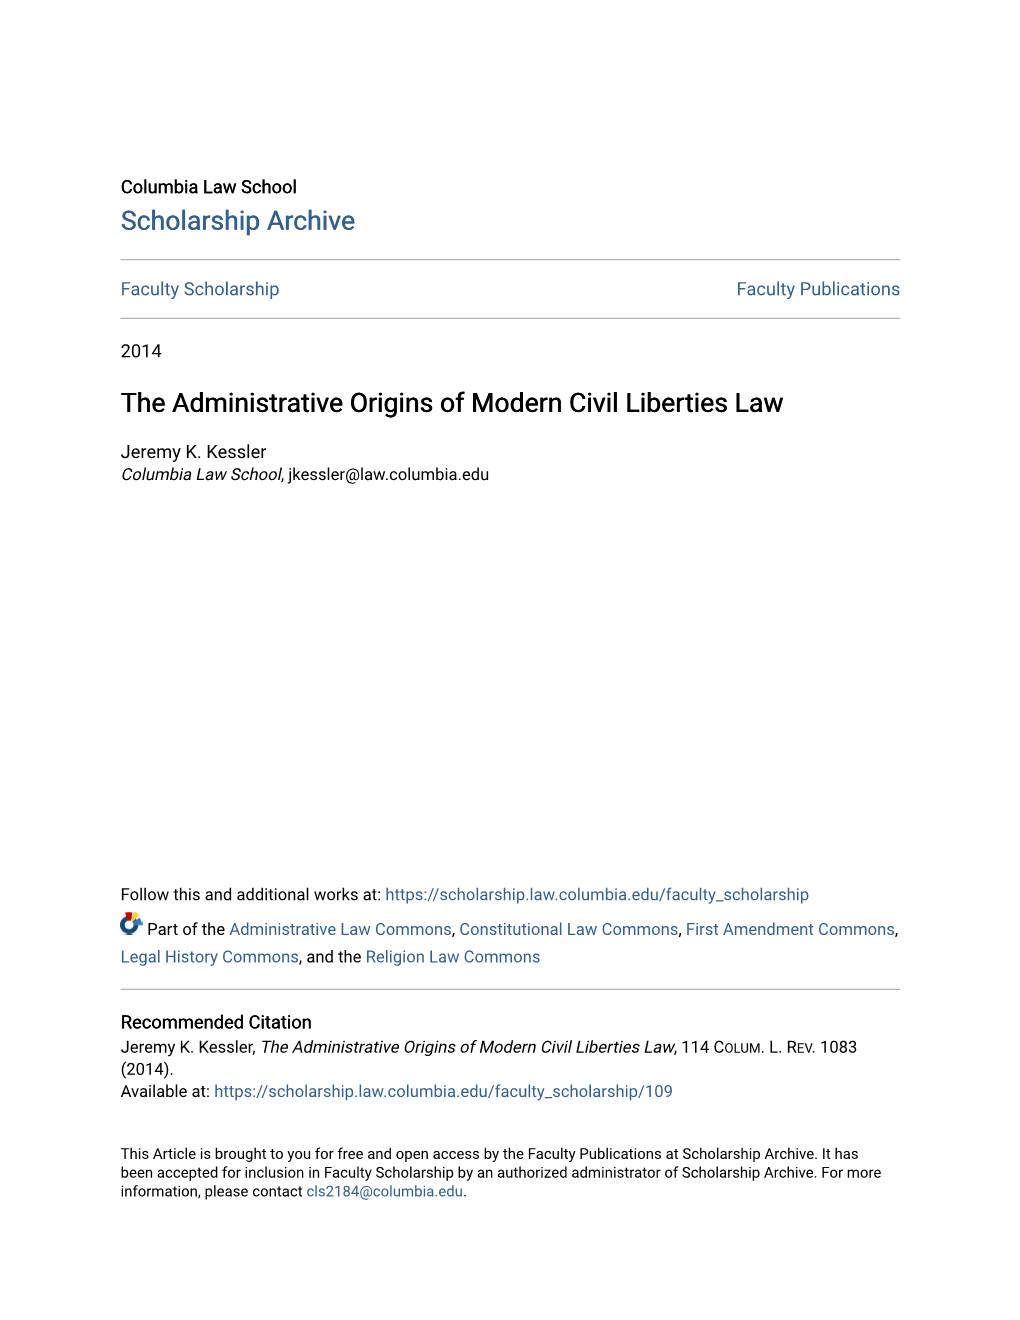 The Administrative Origins of Modern Civil Liberties Law